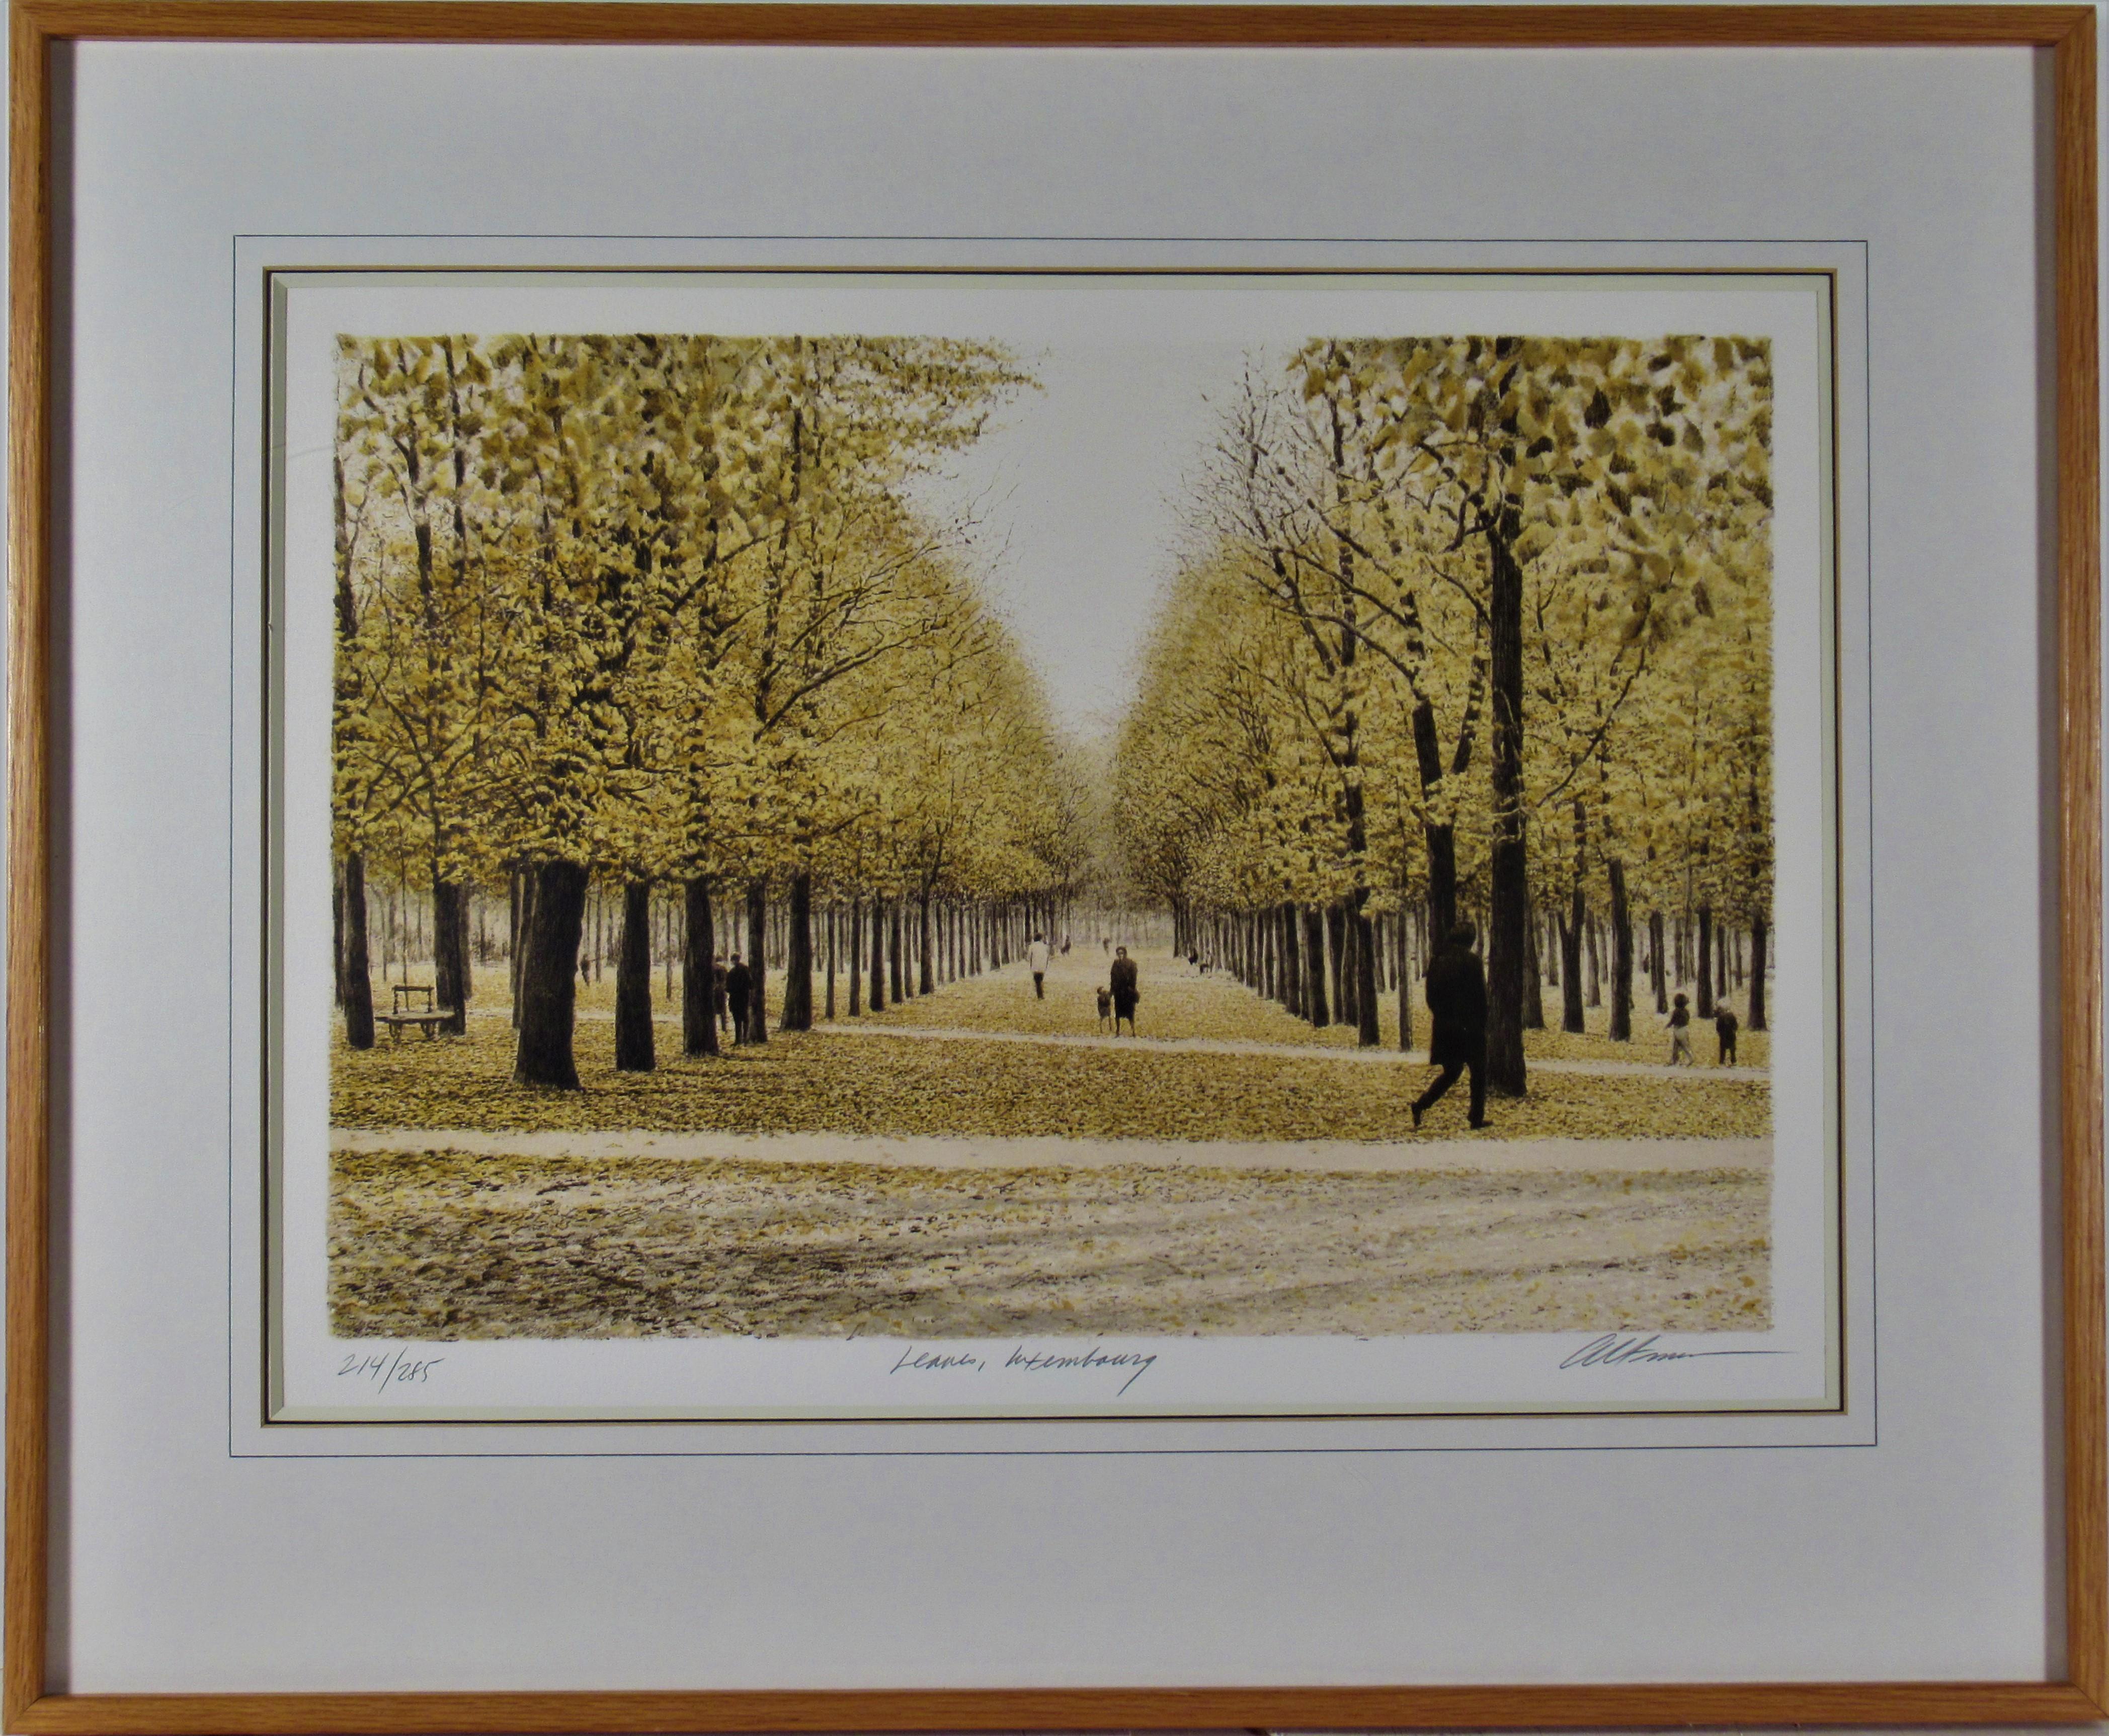 Harold Altman Landscape Print - Leaves Luxembourg